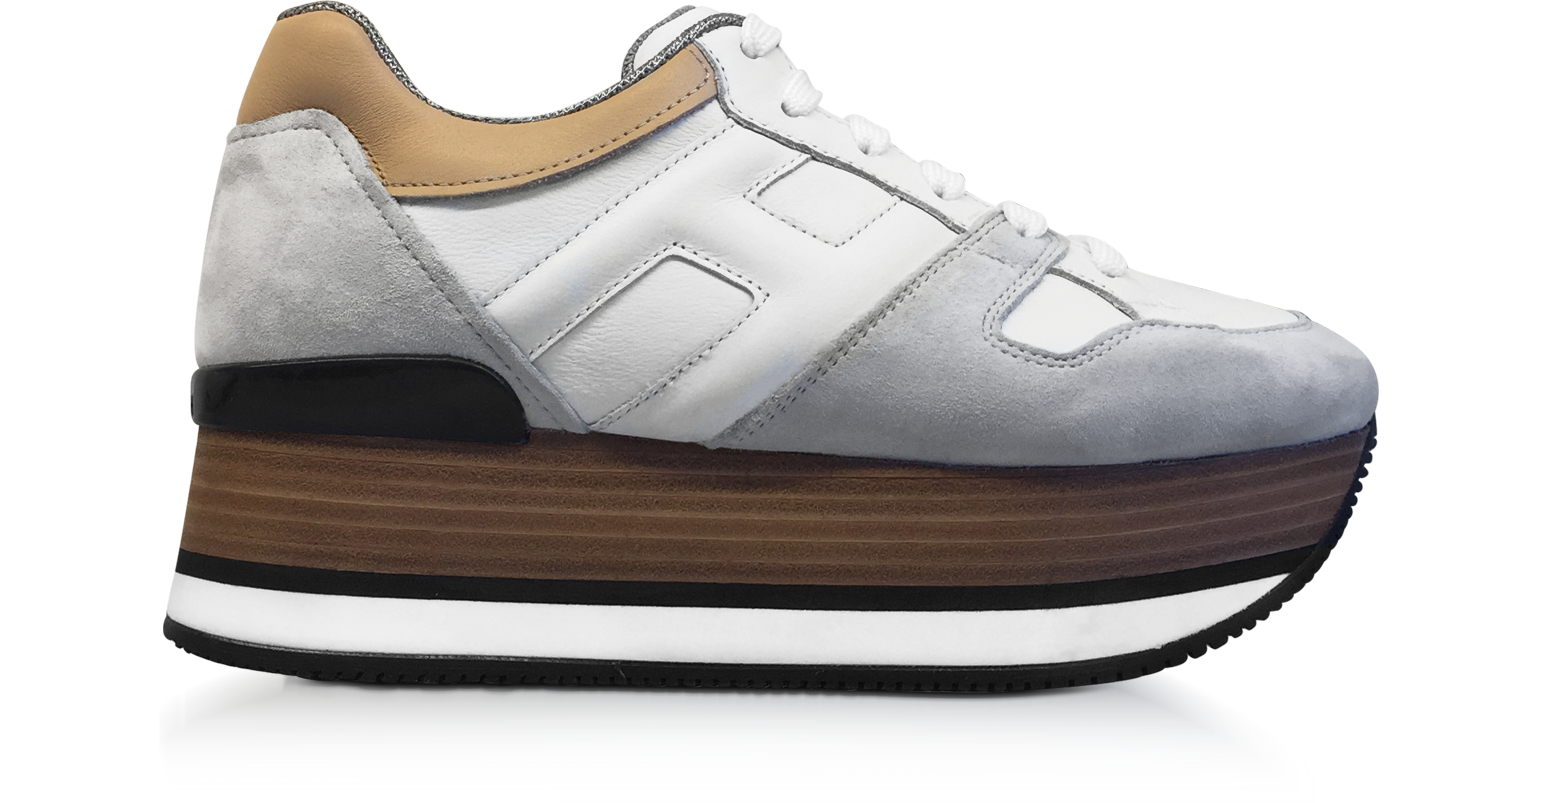 Sneakers Maxi H222 in Suede e Pelle Ghiaccio Hogan 35 (35 EU) su FORZIERI